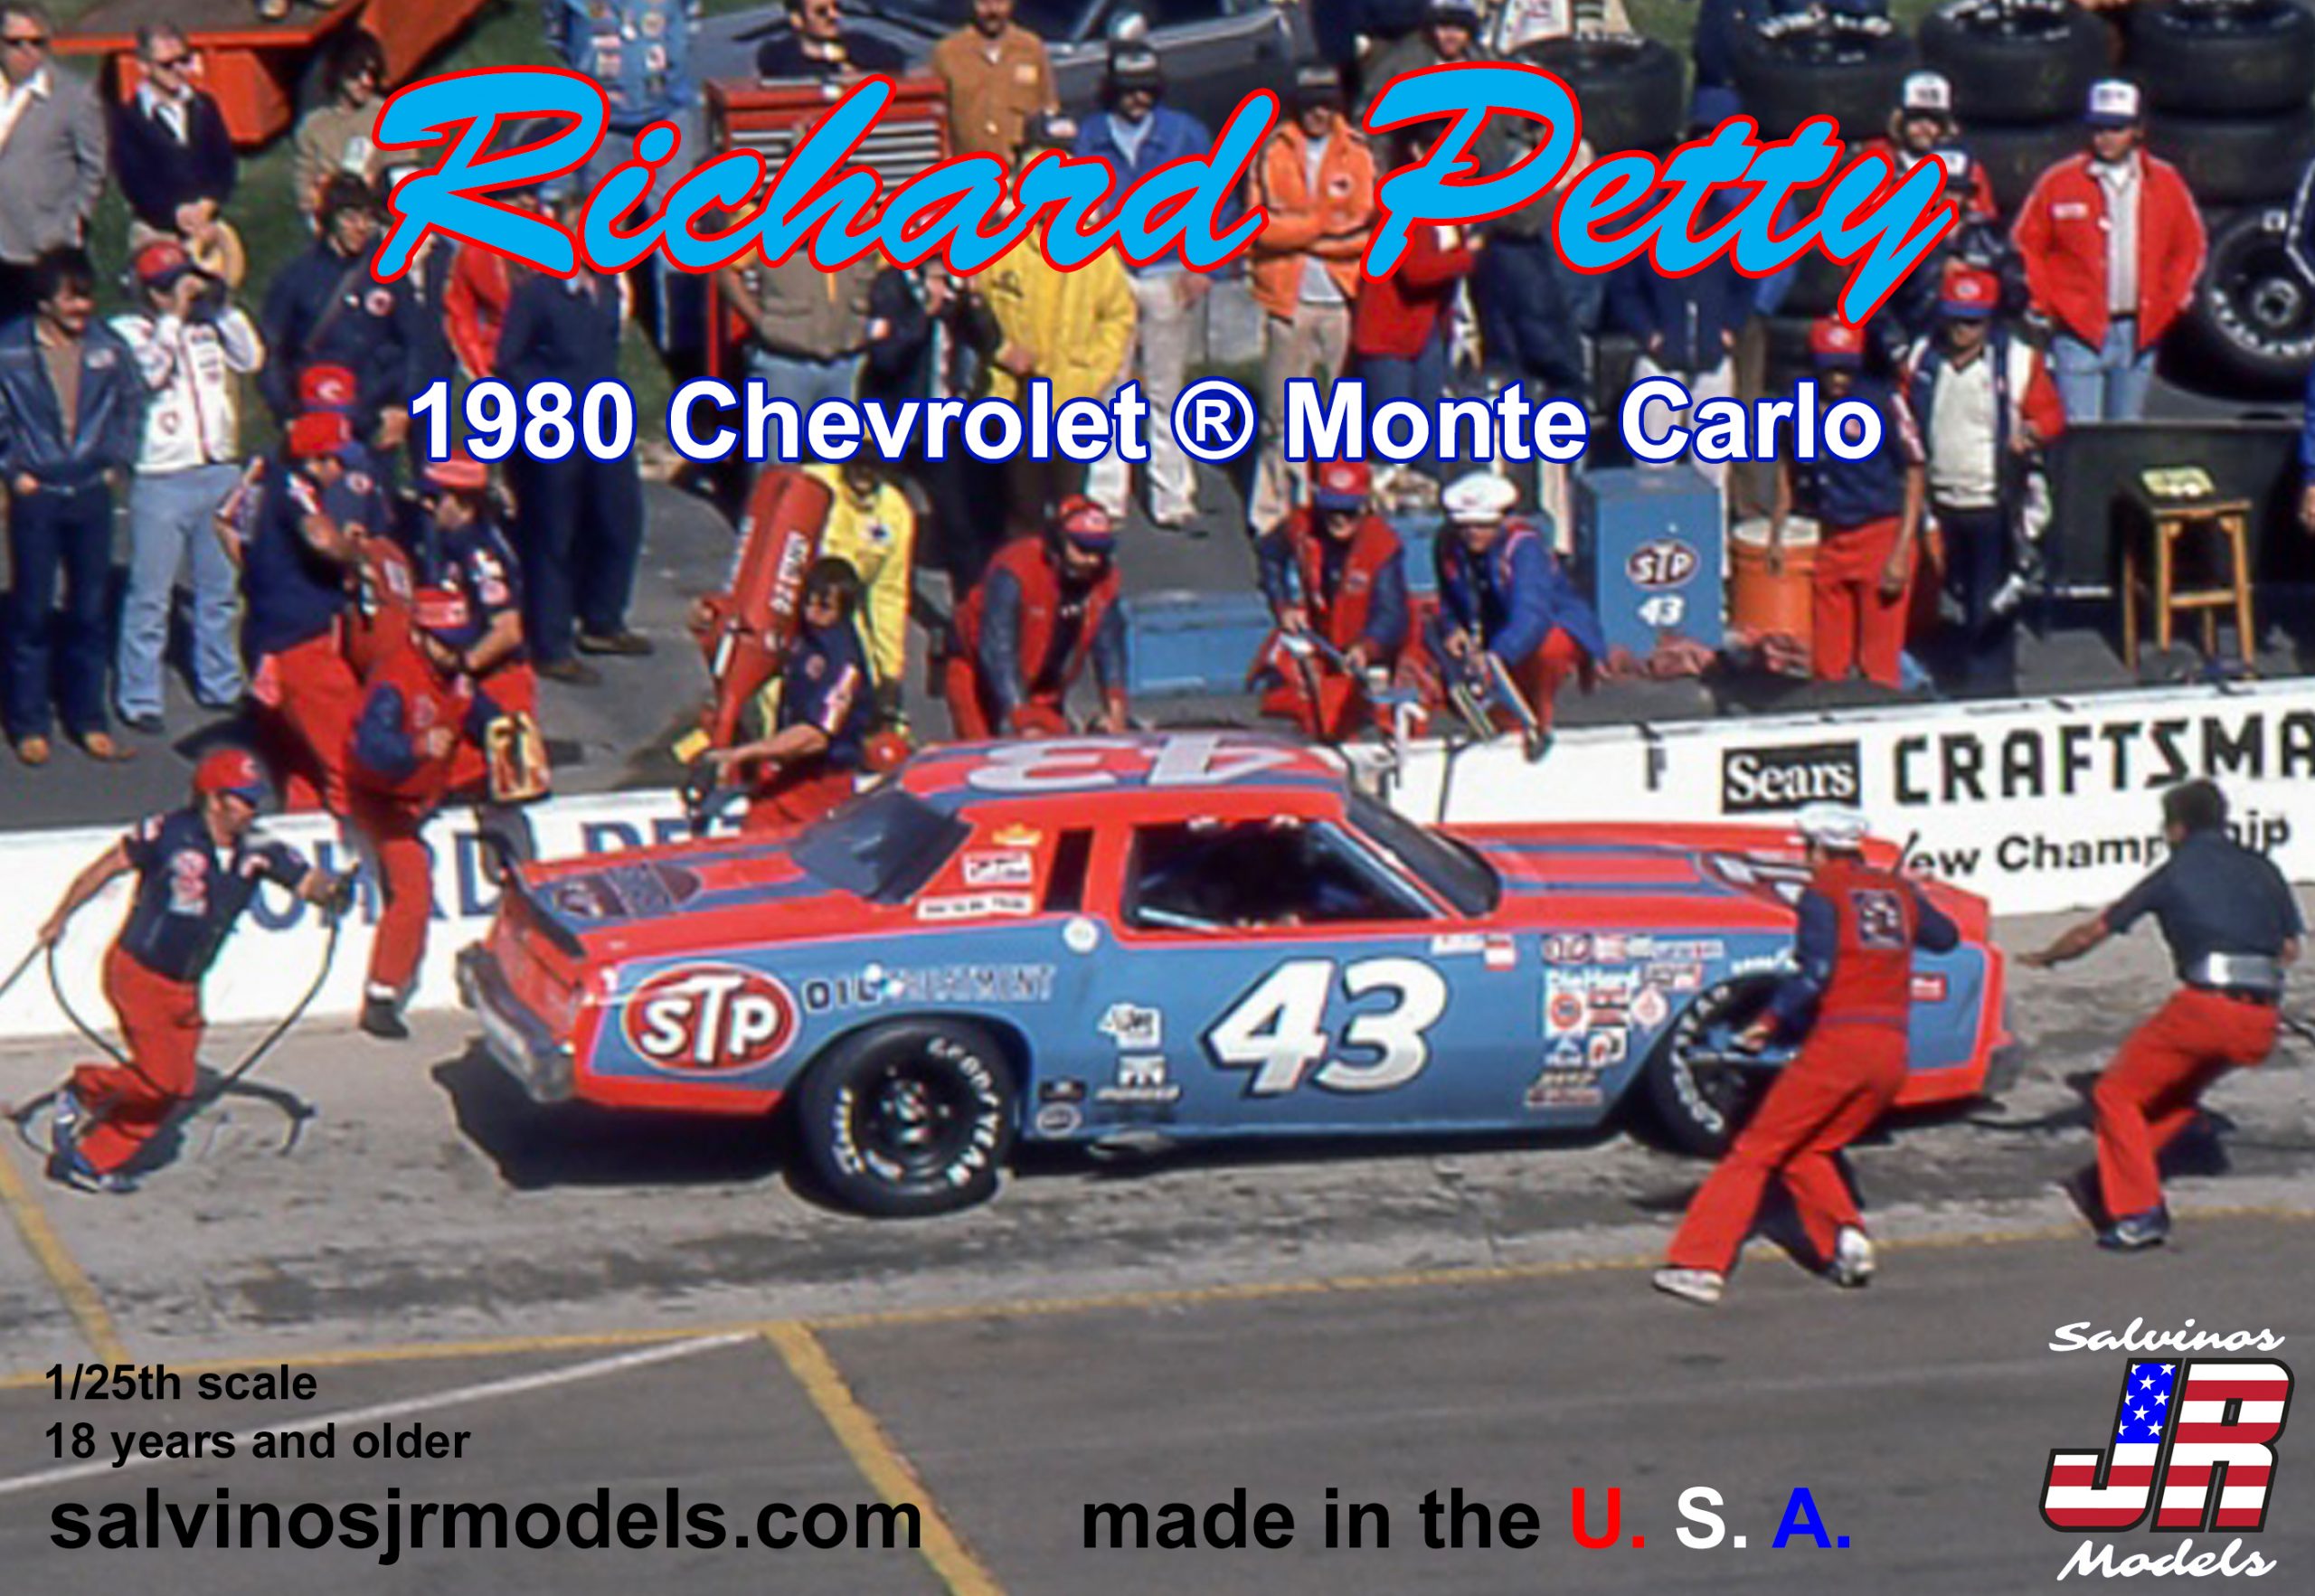 Richard Petty #43 1980 Chevrolet Monte Carlo NASCAR Race Car